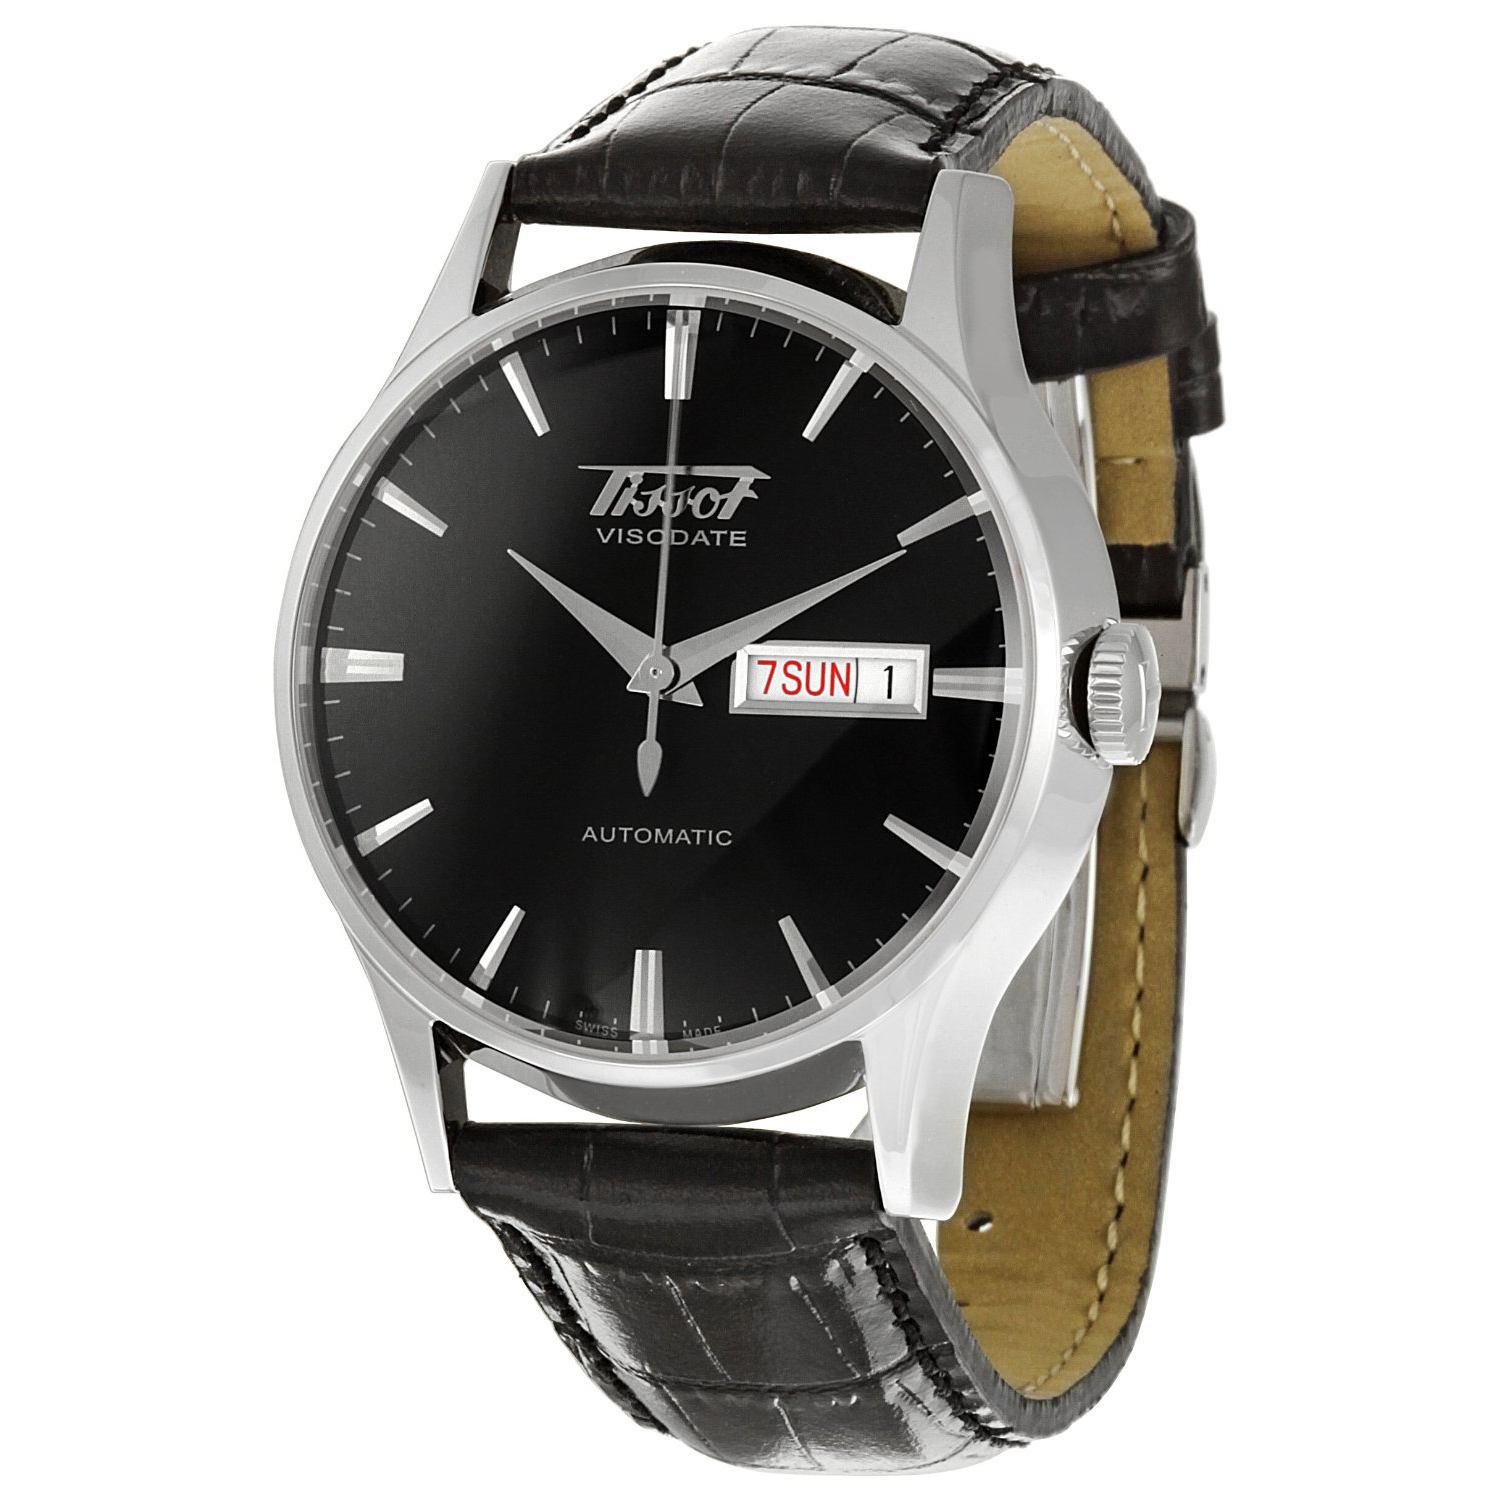 Tissot Men's TIST0194301605101 Visodate Black Dial Watch $388.09, FREE shipping